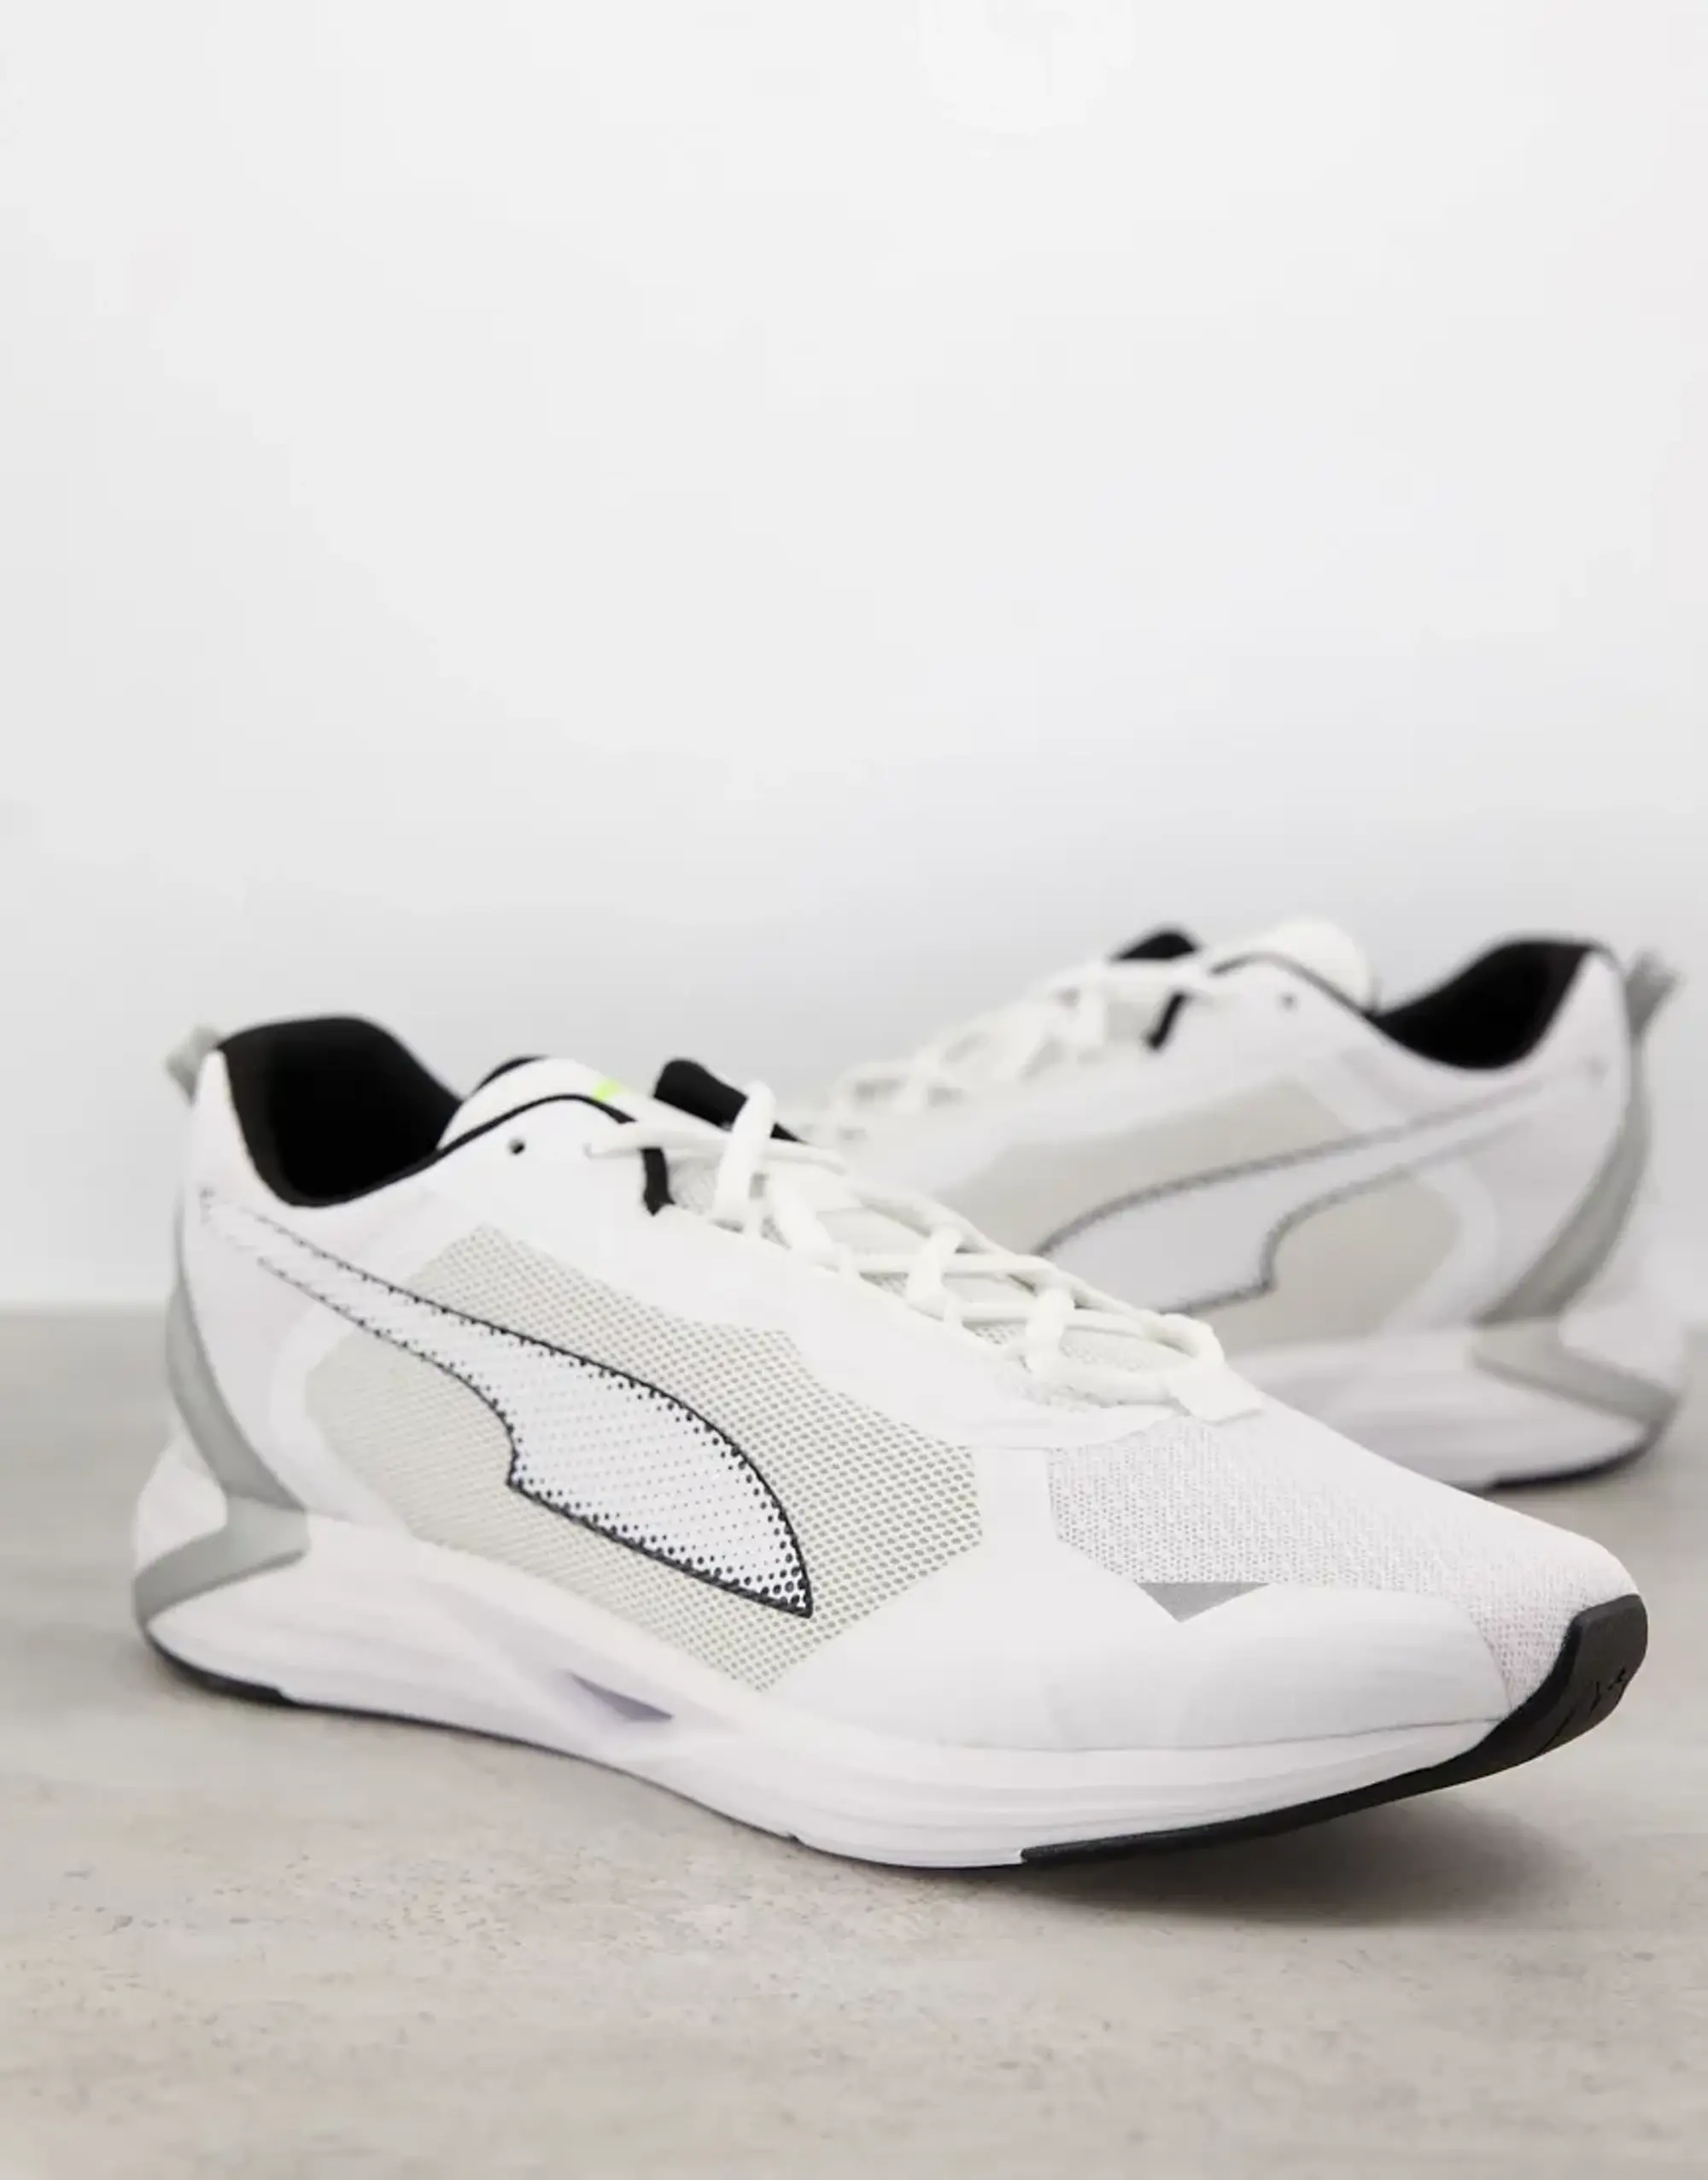 Puma Minima Running Shoes  - White